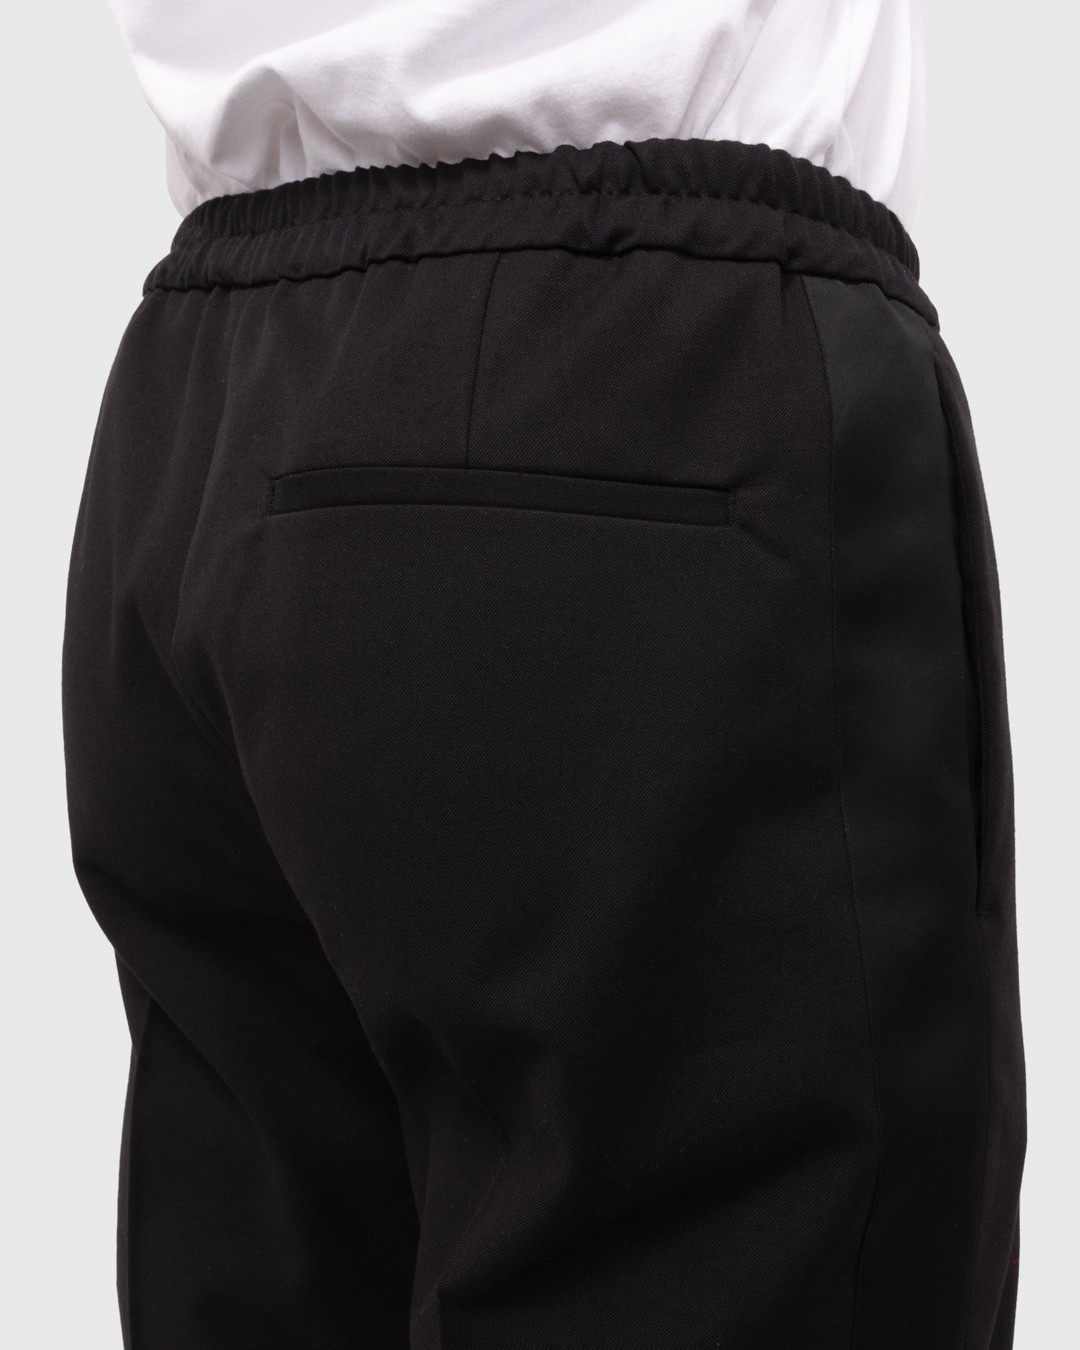 Dries van Noten – Parkino Pants Black - Trousers - Black - Image 5